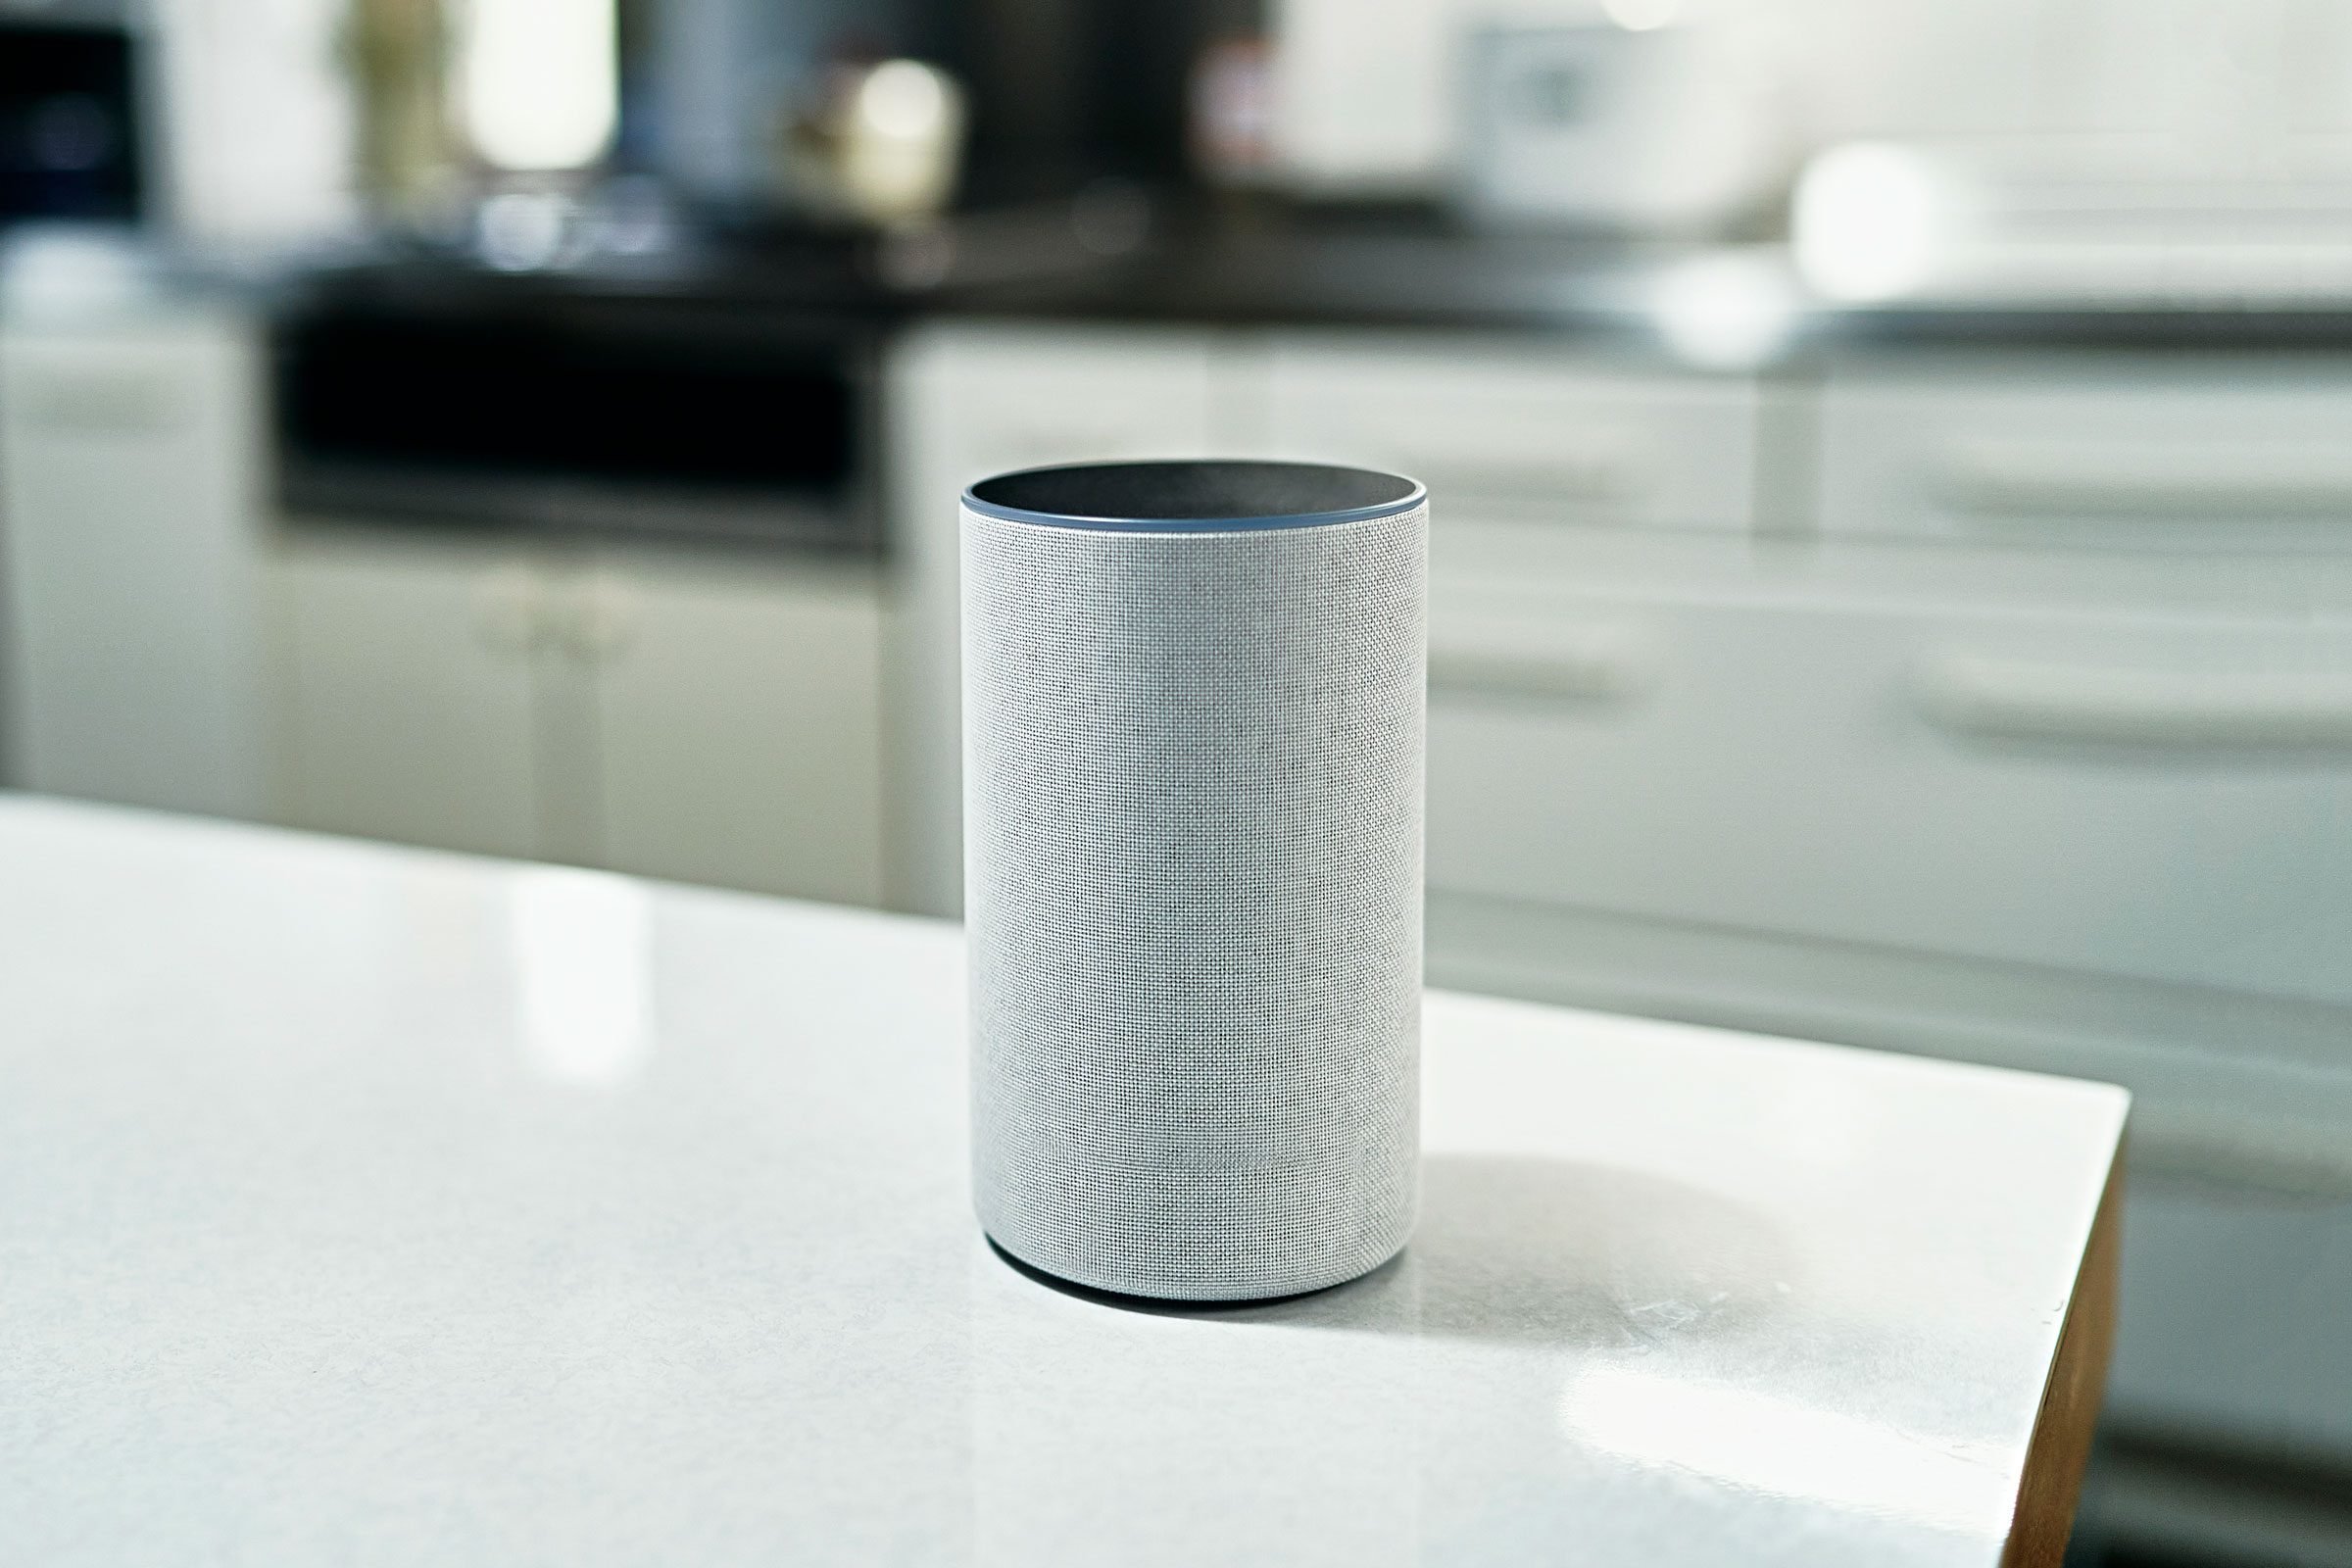 Amazon Alexa sitting on a kitchen counter